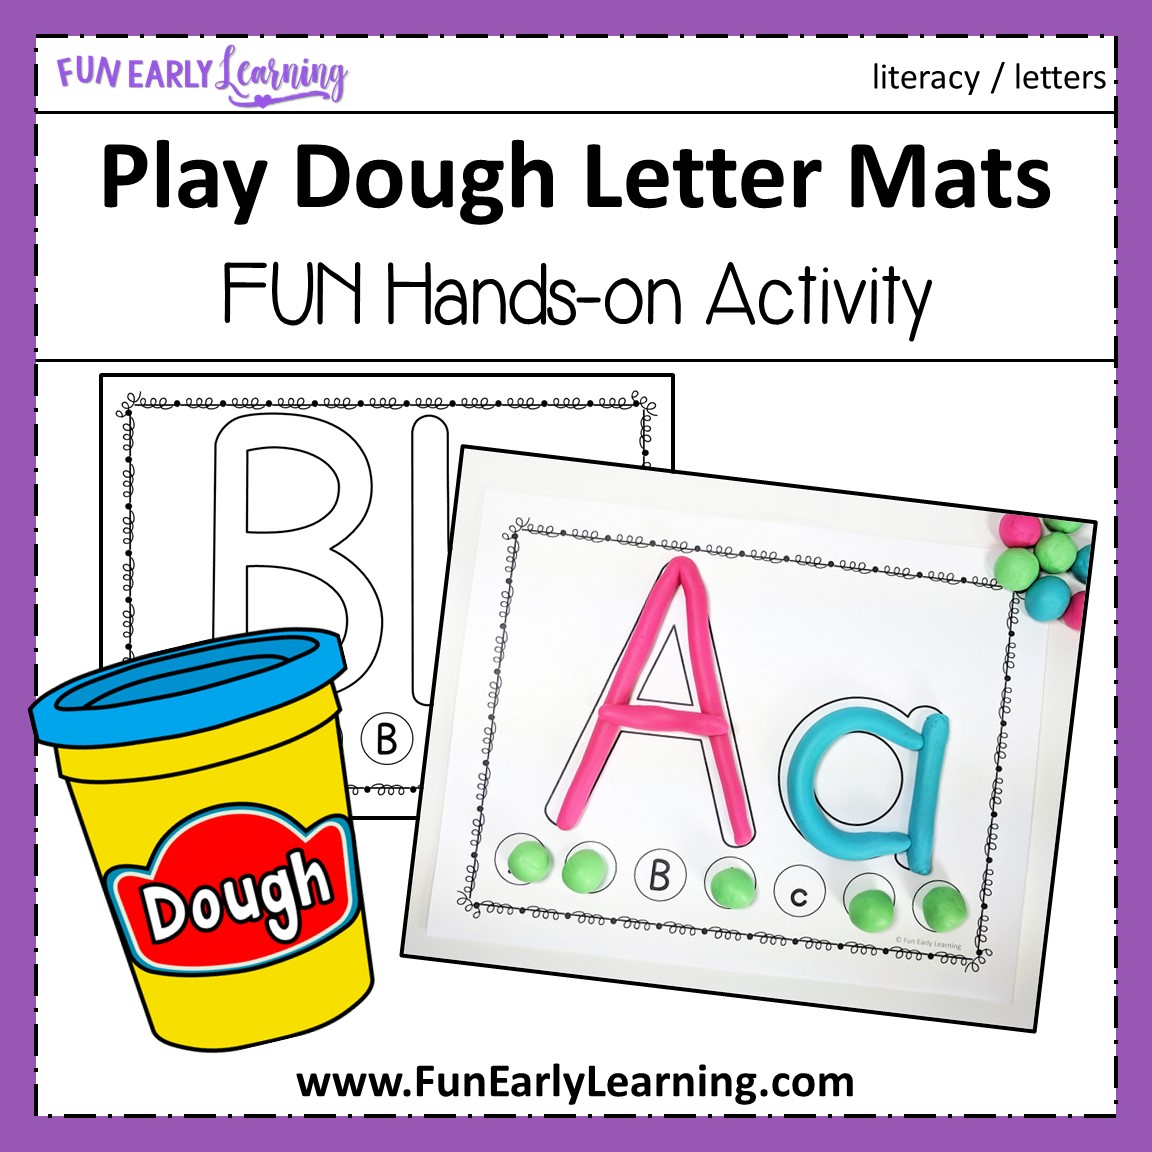 Alphabet letters for playdough